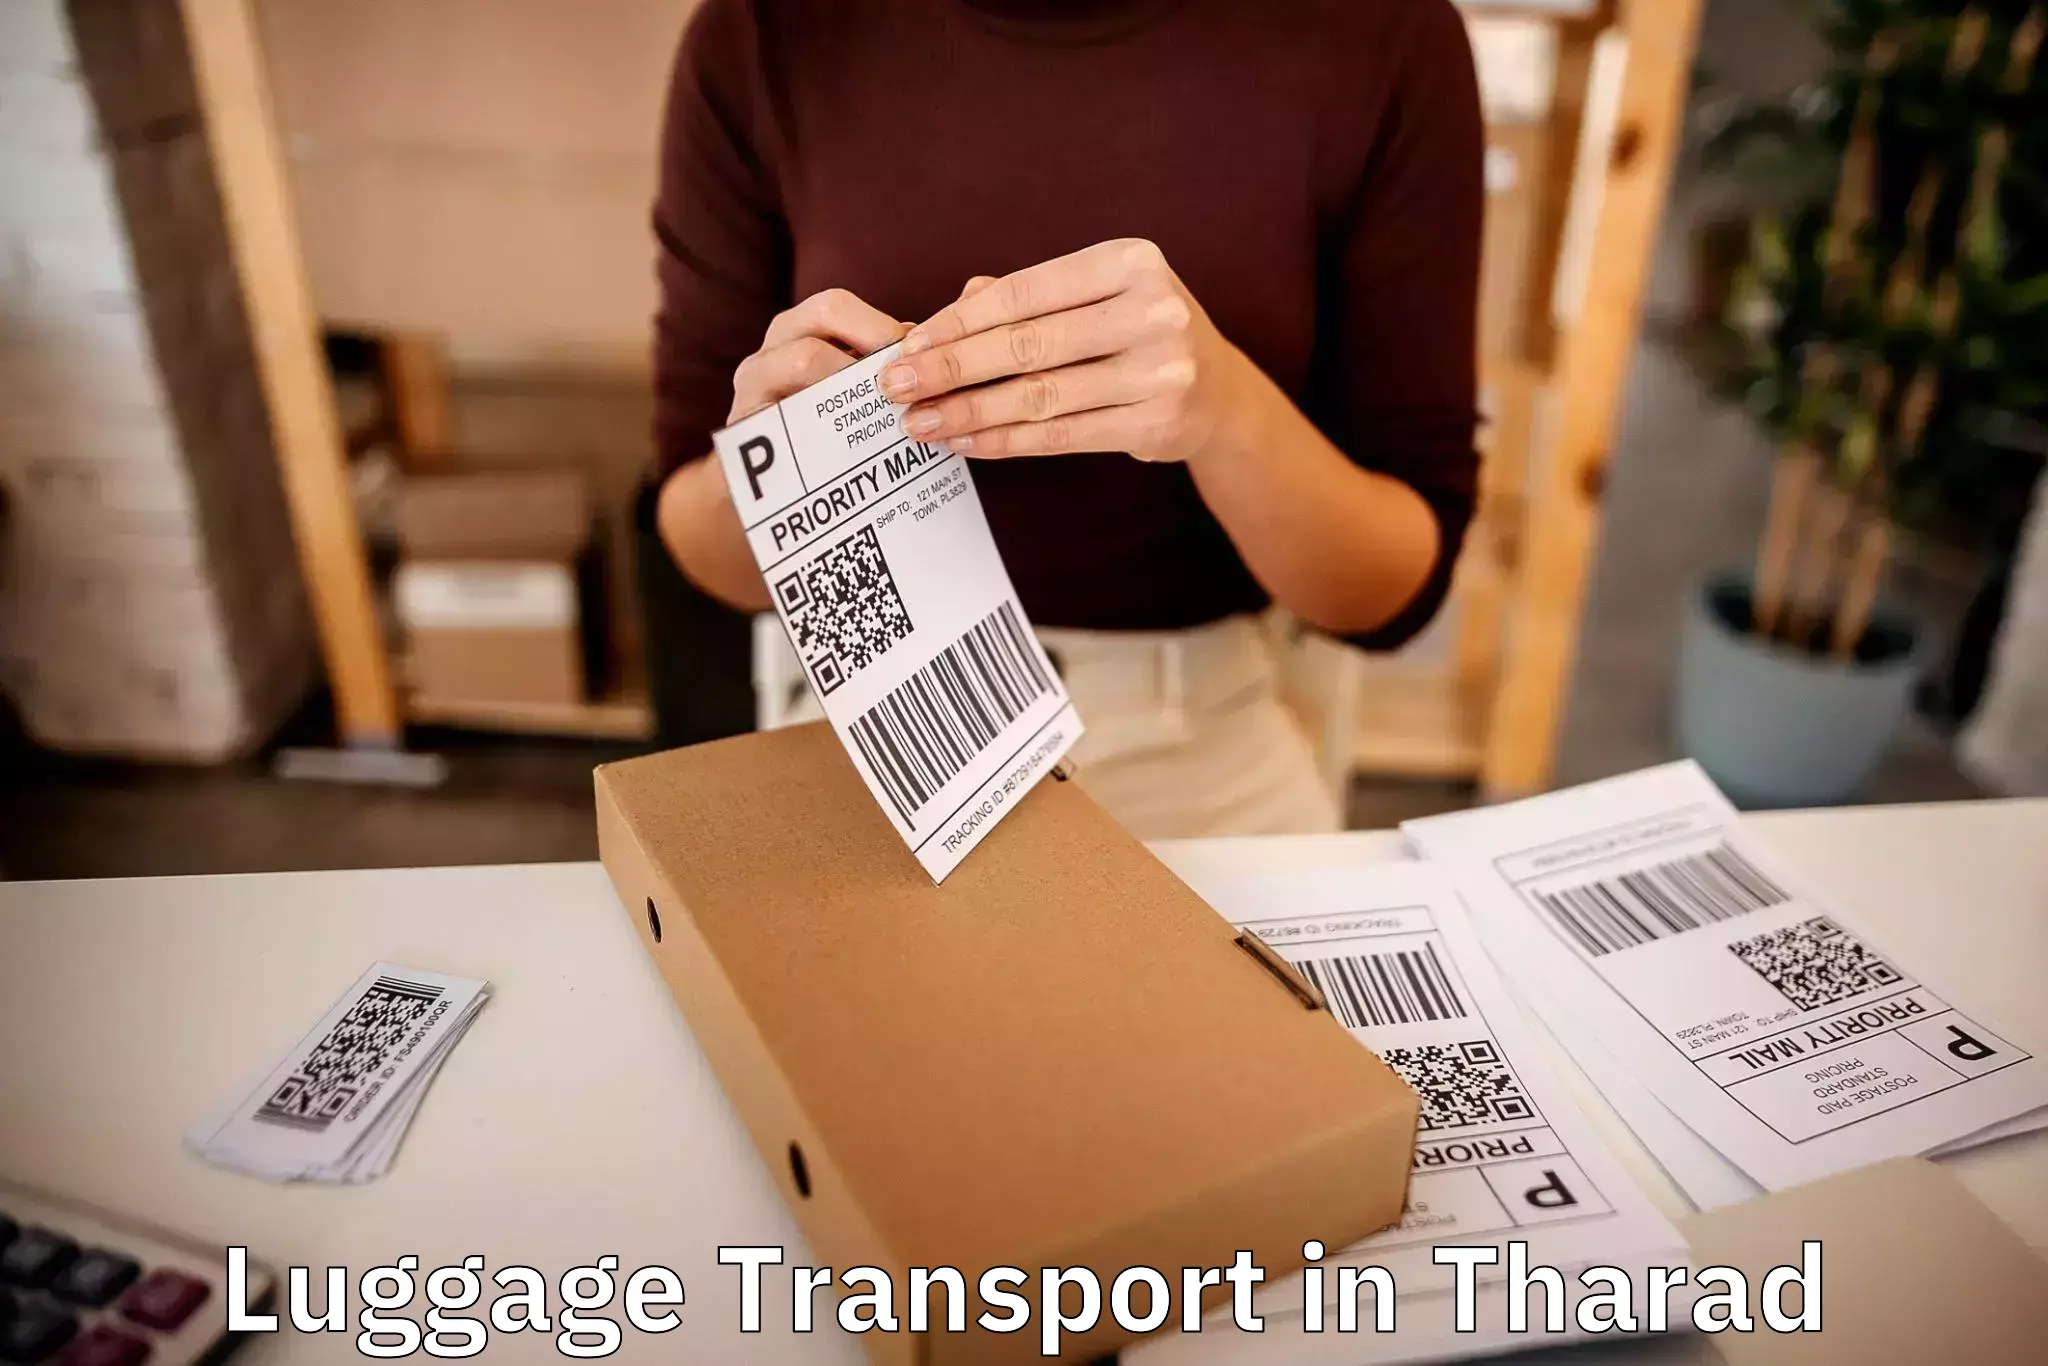 Multi-destination luggage transport in Tharad